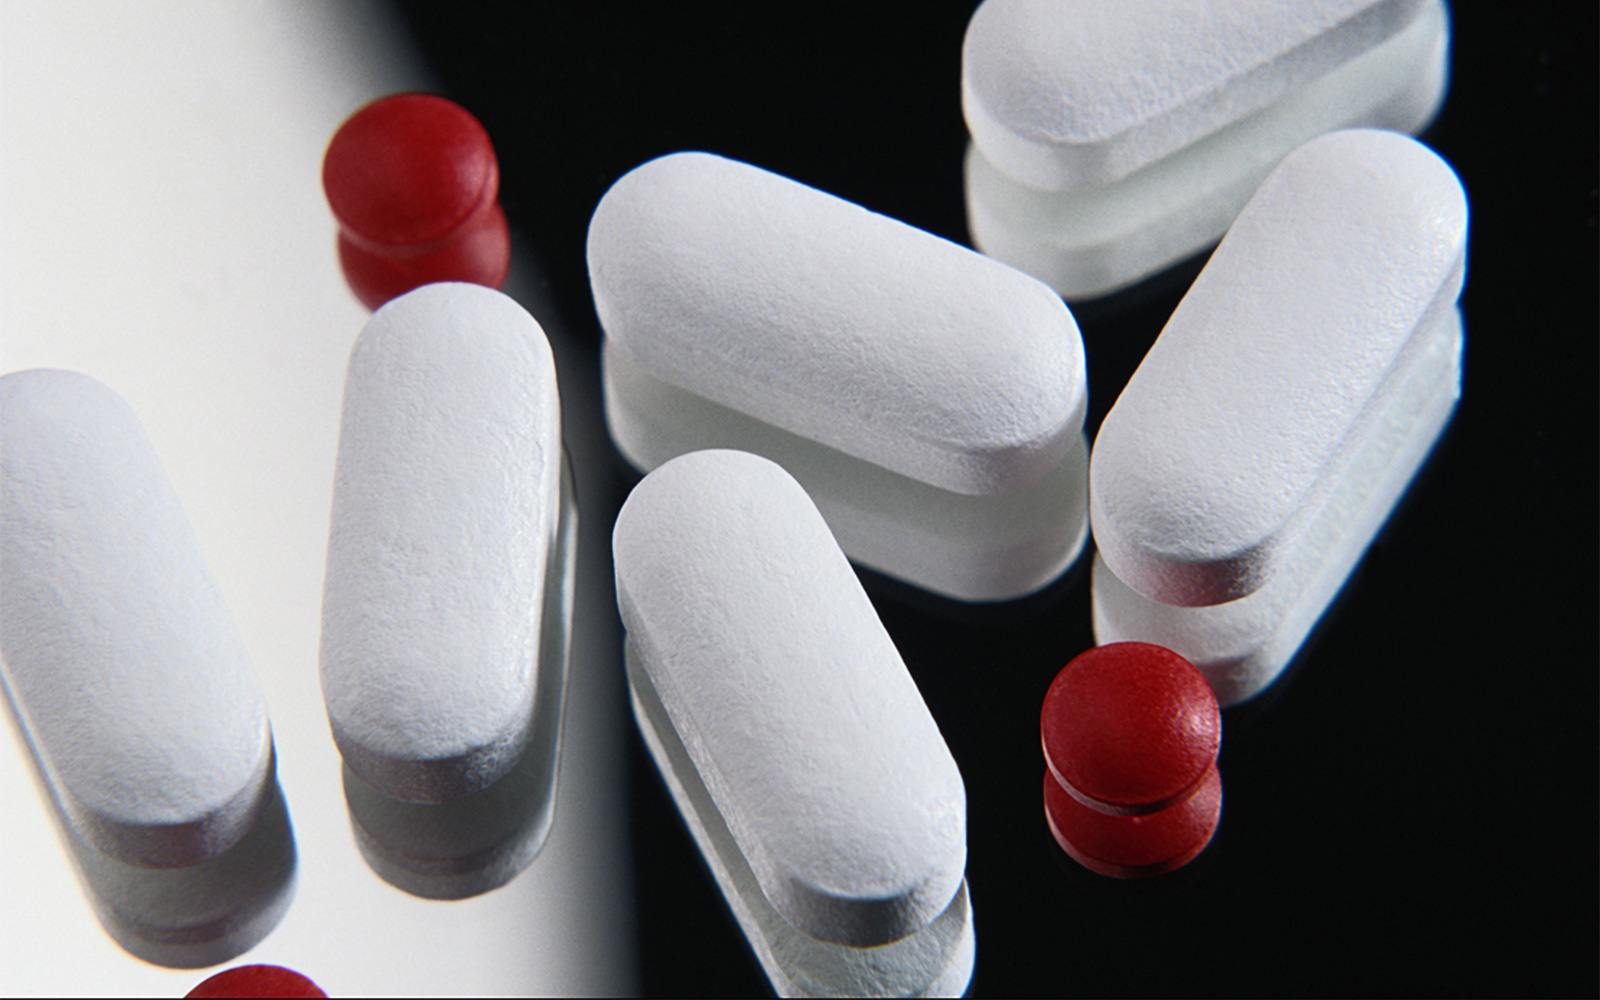 Close-up of FDA-regulated medication pills on a mirror